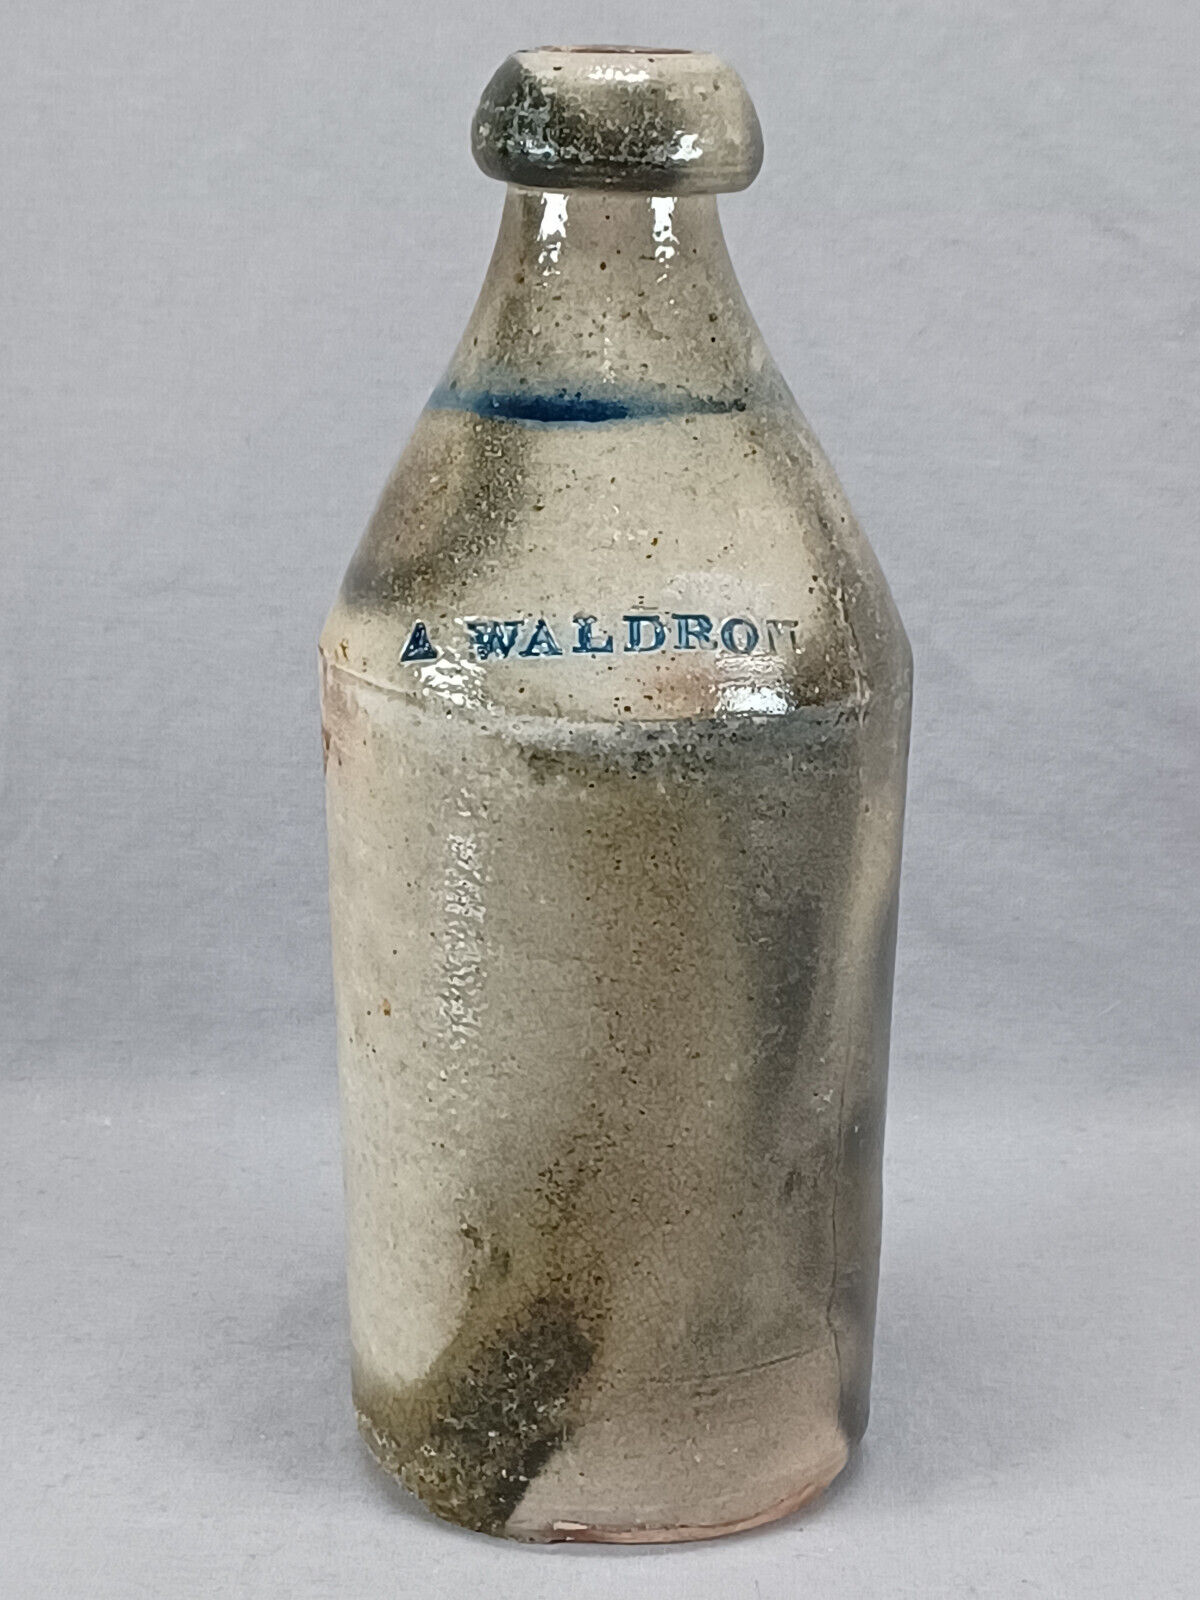 Mid 19th Century A Waldrom Saltglaze Stoneware Bottle New England Area